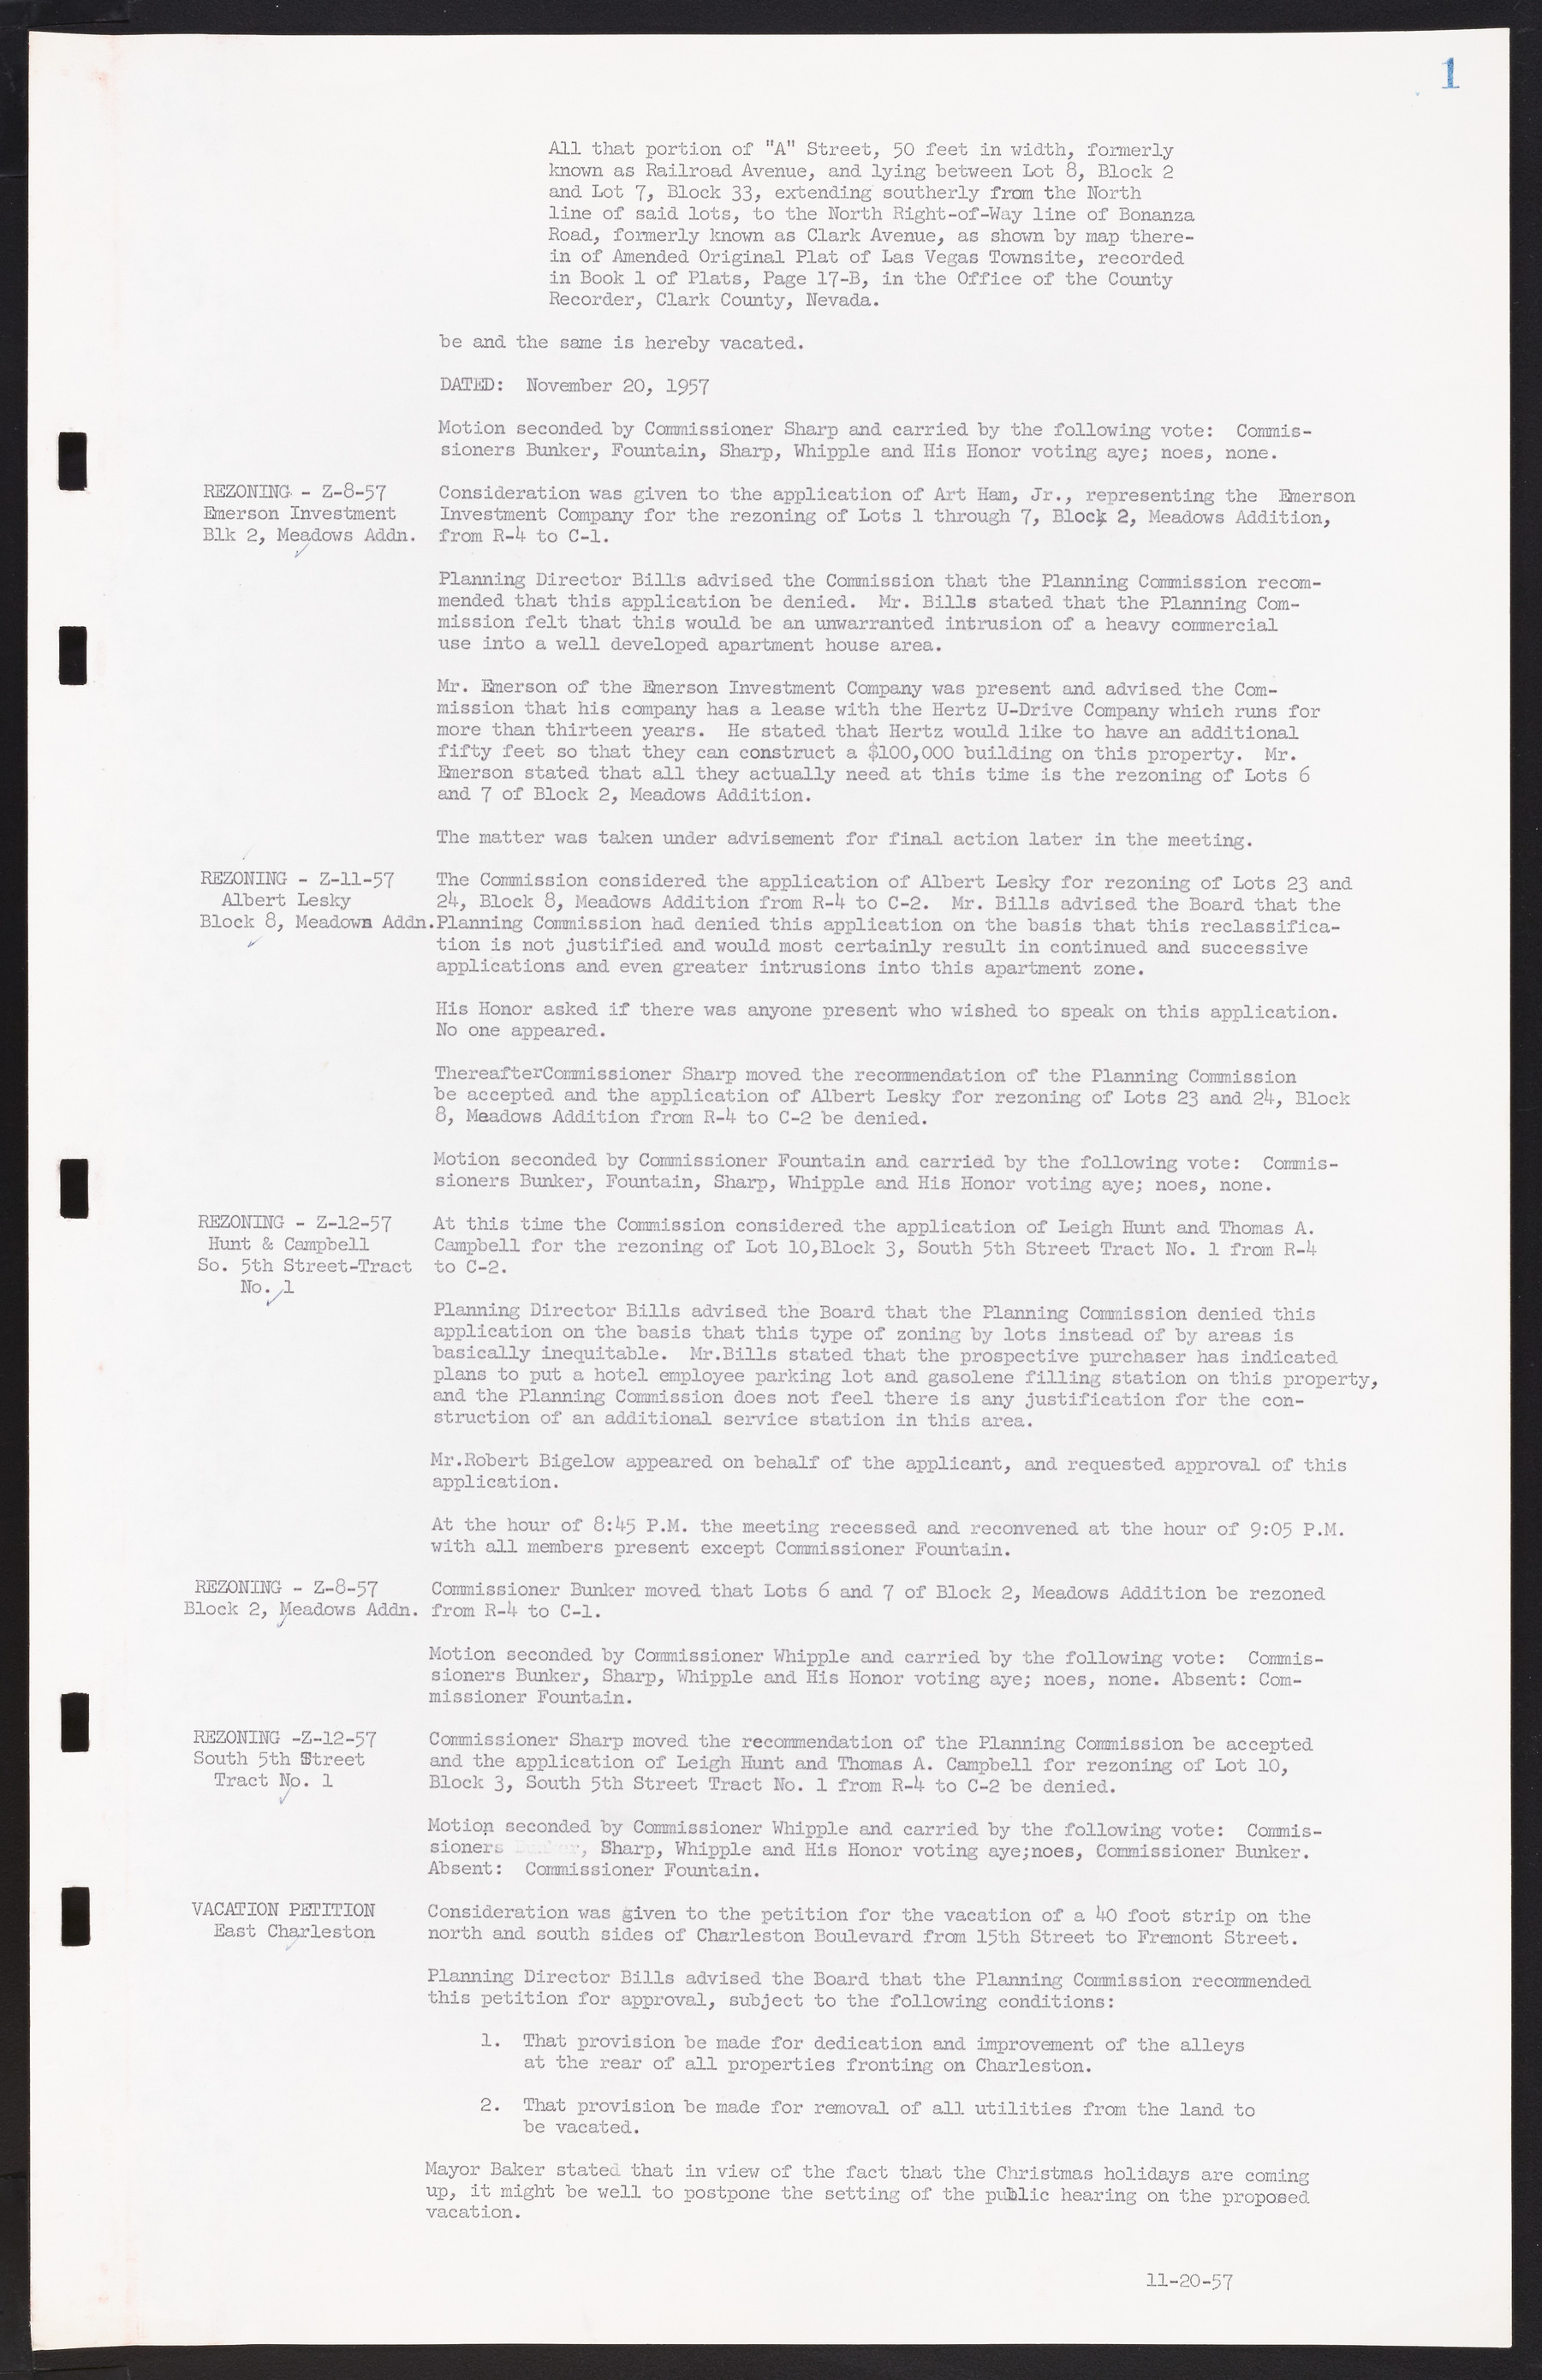 Las Vegas City Commission Minutes, November 20, 1957 to December 2, 1959, lvc000011-5